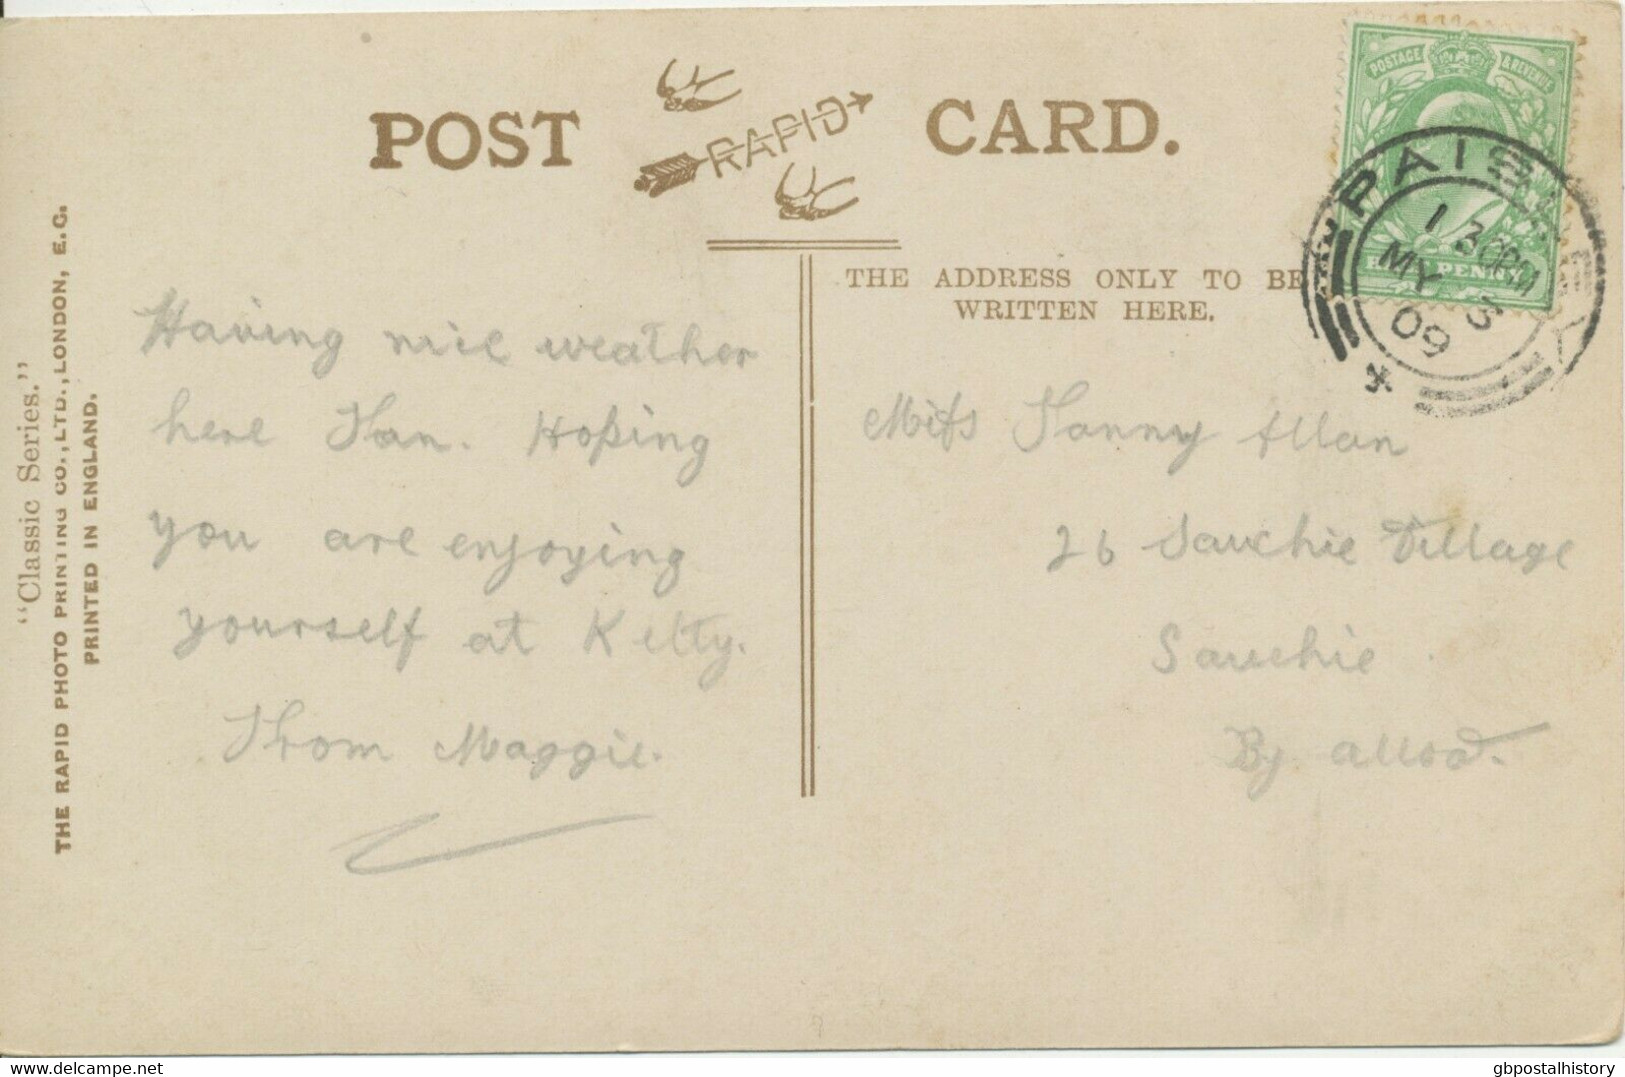 GB SCOTTISH VILLAGE POSTMARKS „PAISLEY“ Superb Strike (25mm, Time Code „1 30PM“) On VF RP Postcard (Madge Crichton) 1909 - Scozia